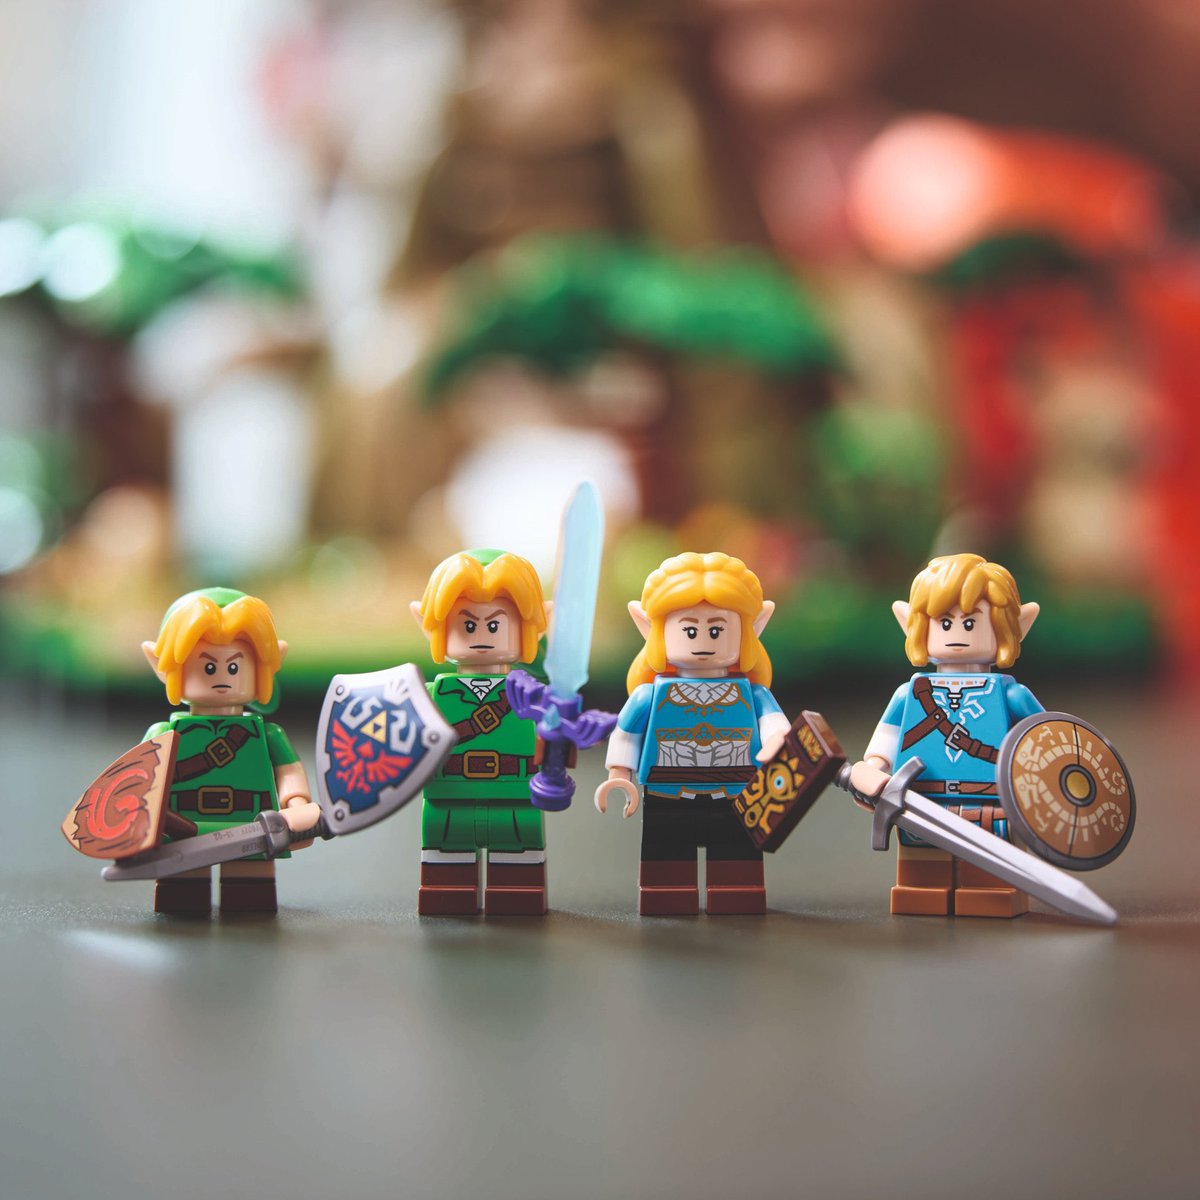 🤩
#LEGO #Zelda 
#OcarinaOfTime #BreathOfTheWild 
#GreatDekuTree #GranArbolDeku